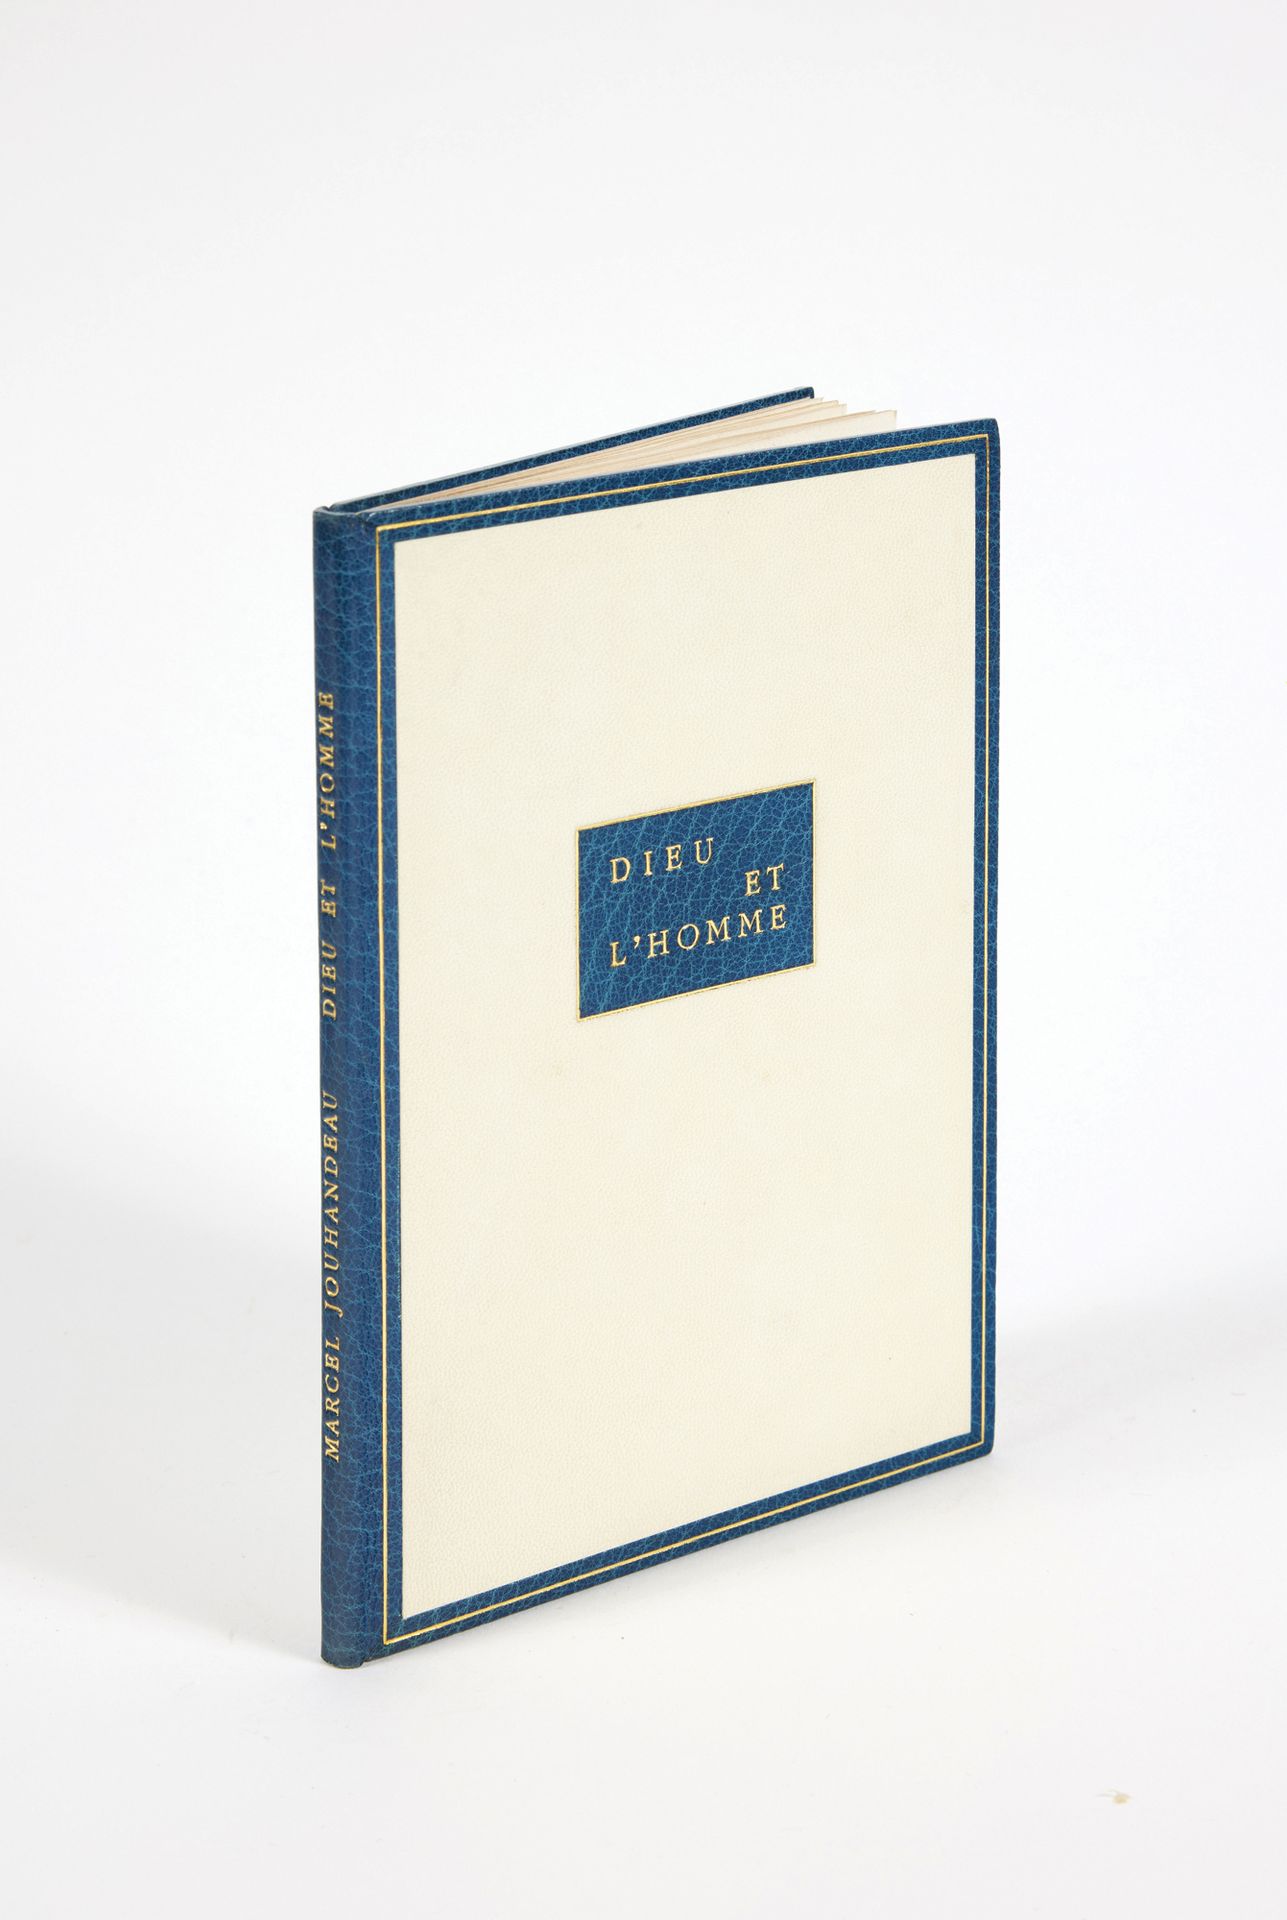 JOUHANDEAU, Marcel. Dieu et l'Homme. P. A. B., 1954 [Alès]; in-12 blue duck moro&hellip;